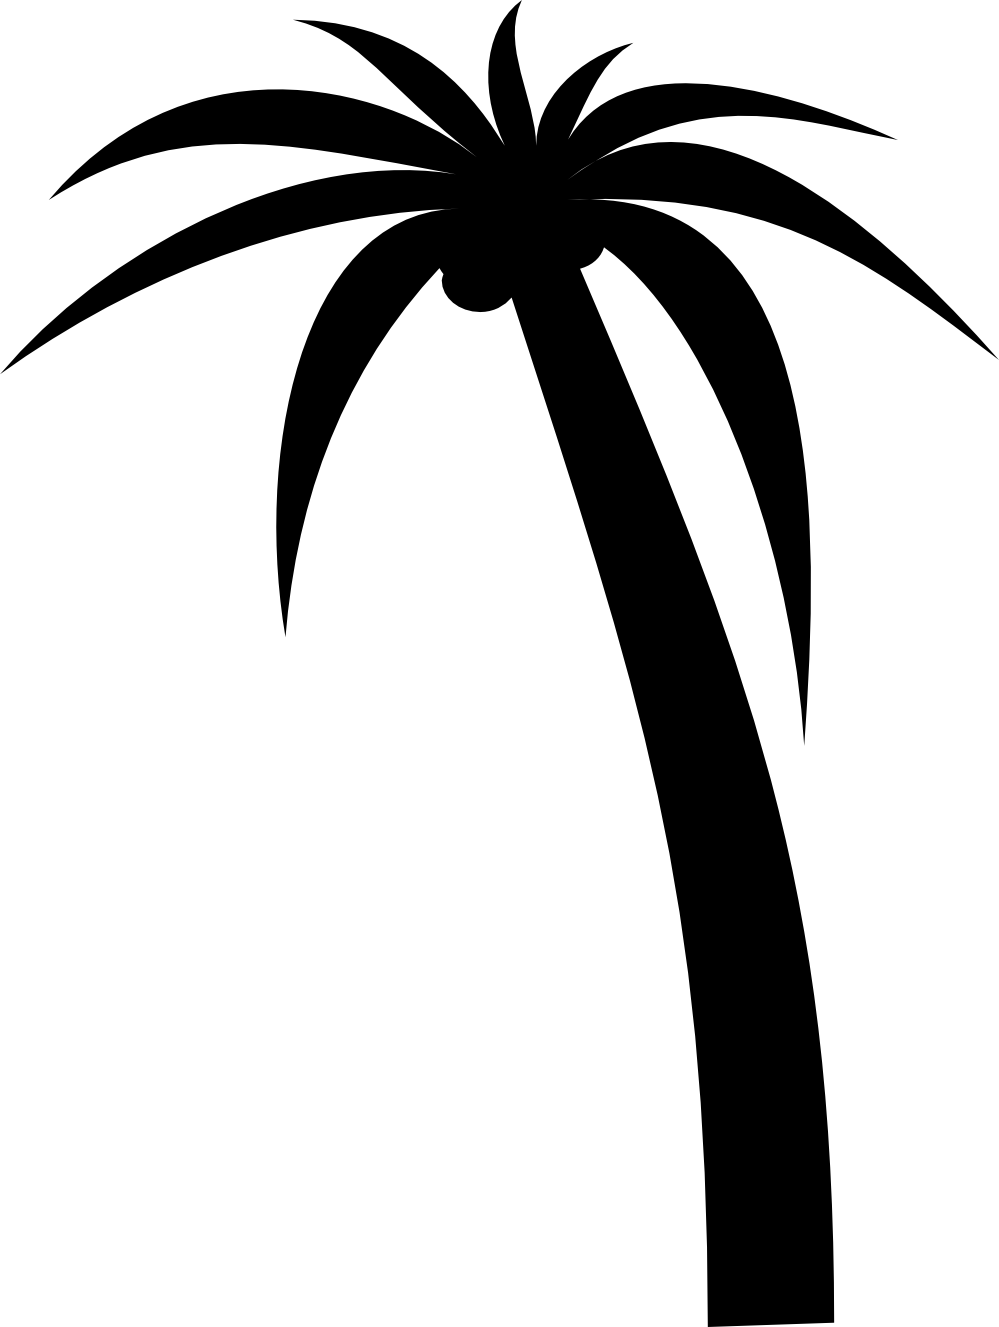 Palm tree sunset silhouette clipart - ClipartFox